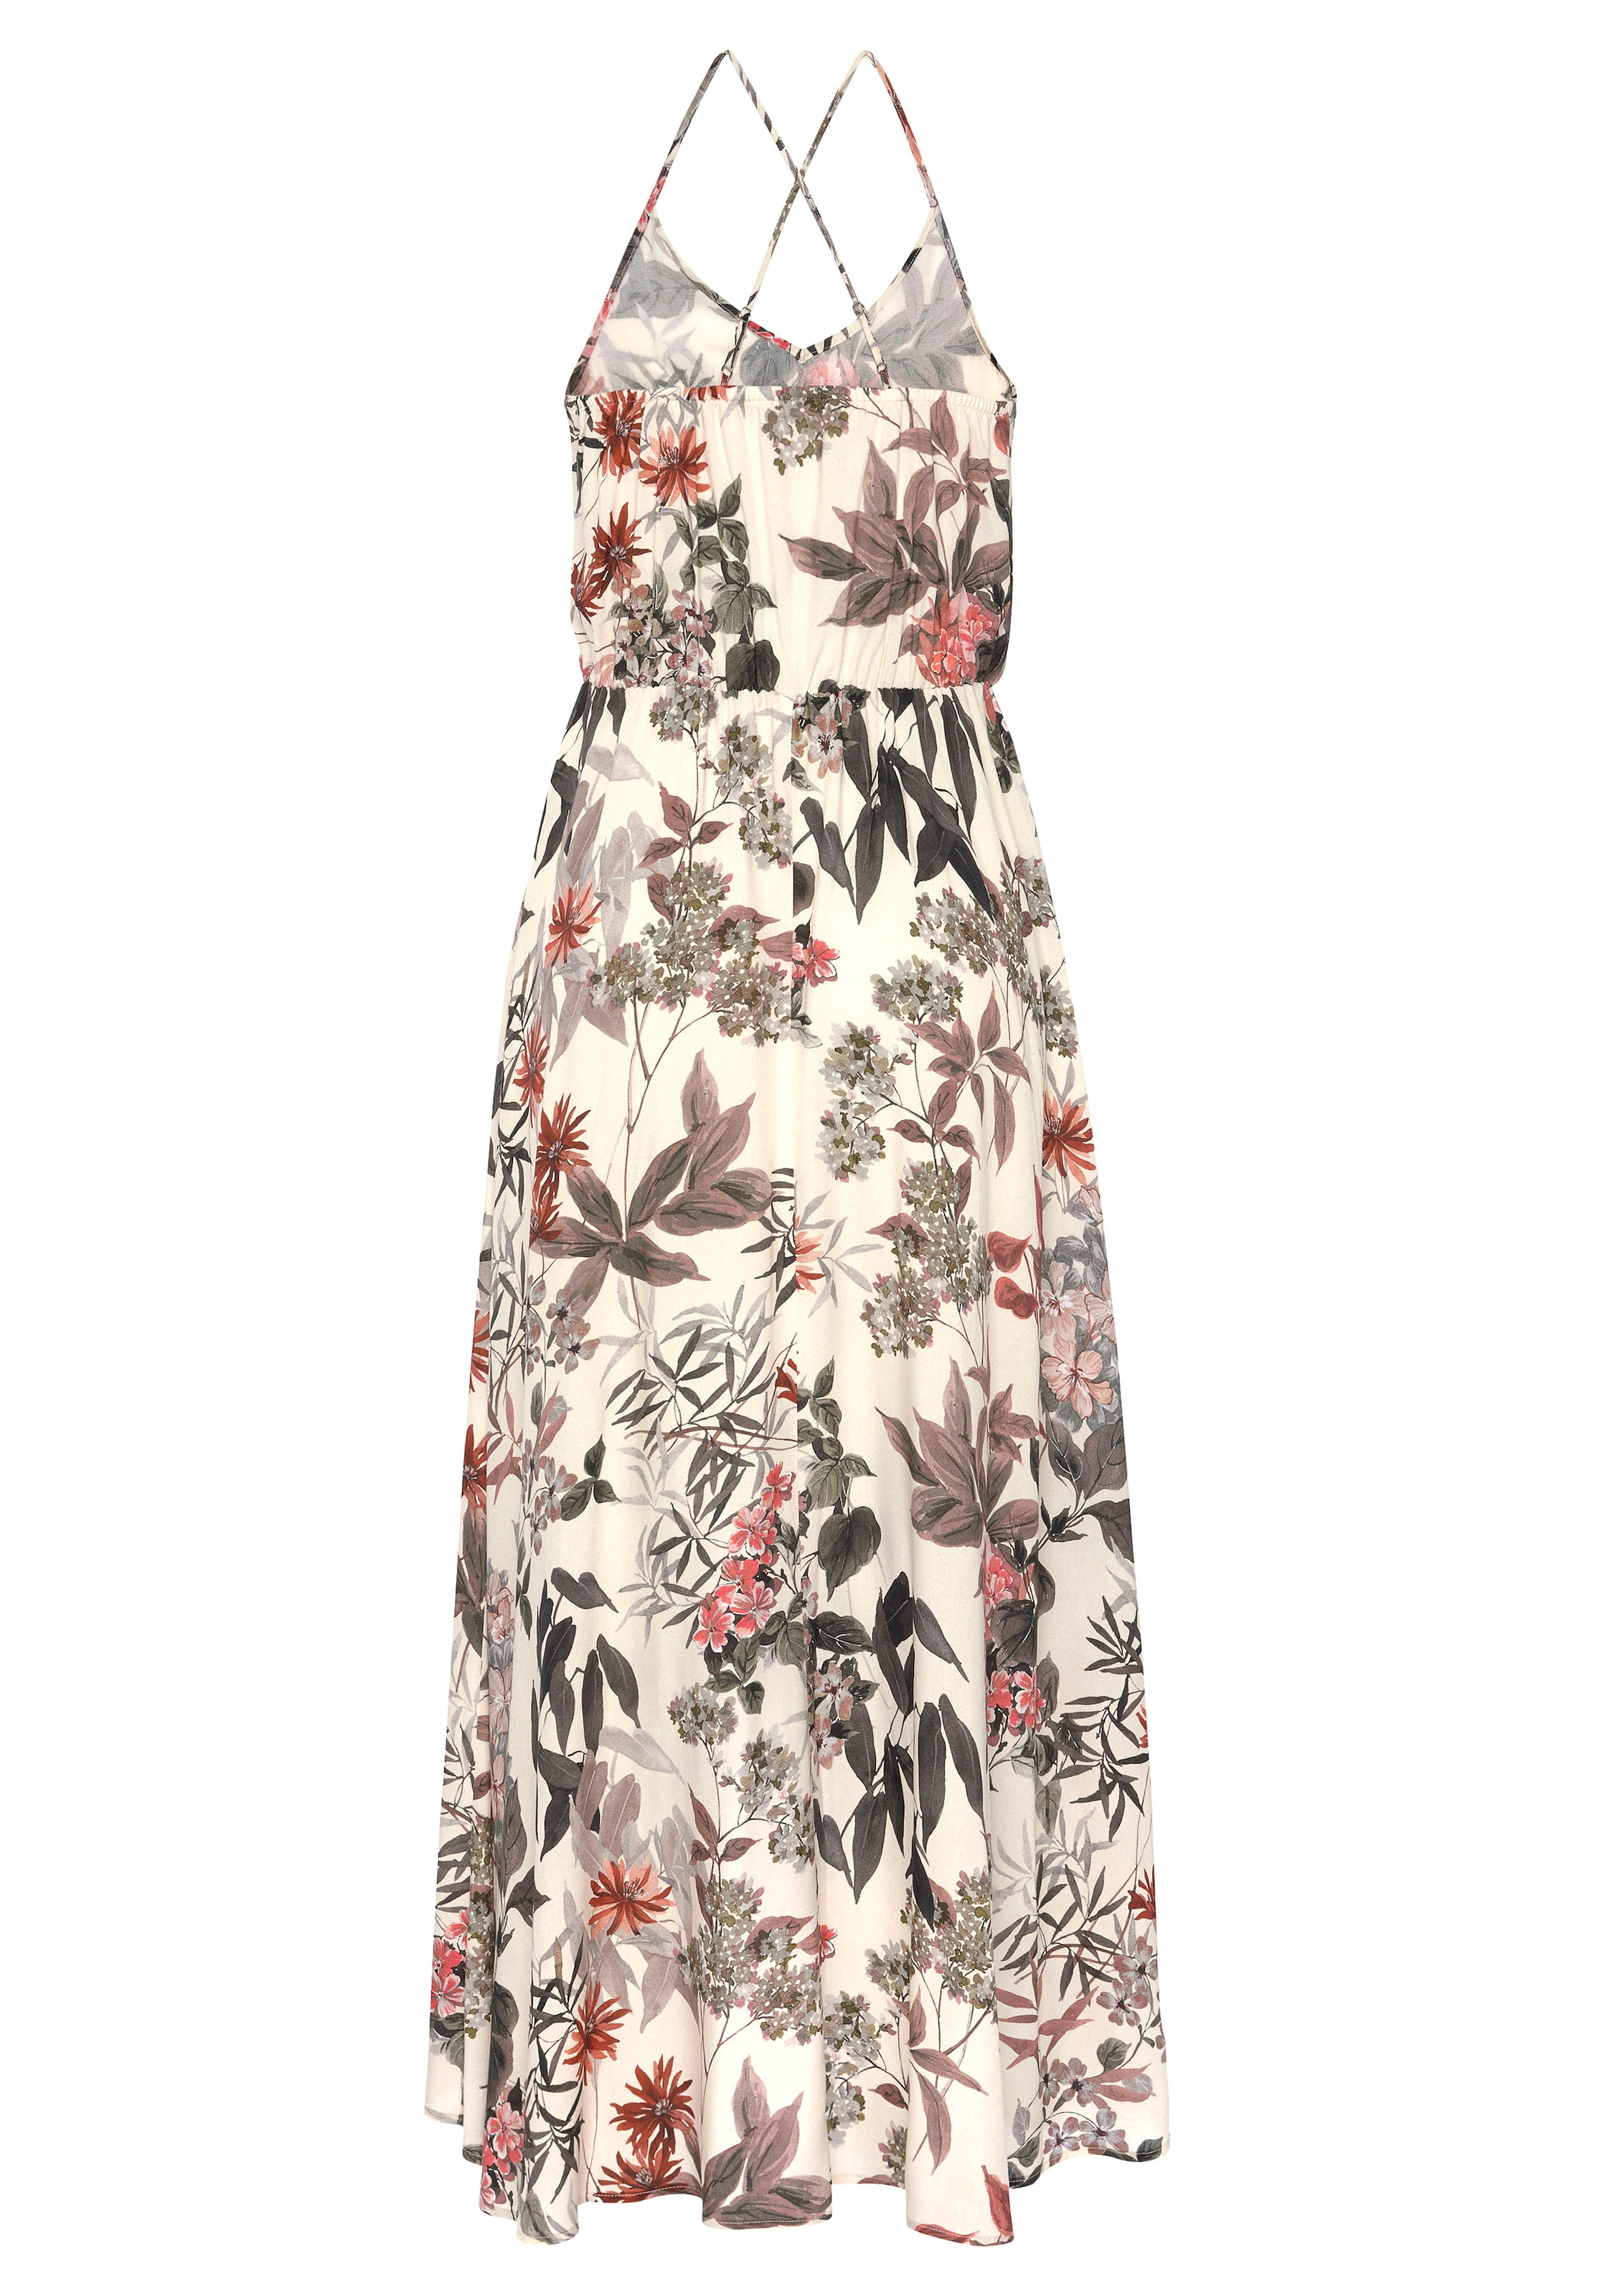 LASCANA Maxikleid, mit Blumenprint, leichtes Sommerkleid im Vokuhila-Stil, Strandkleid